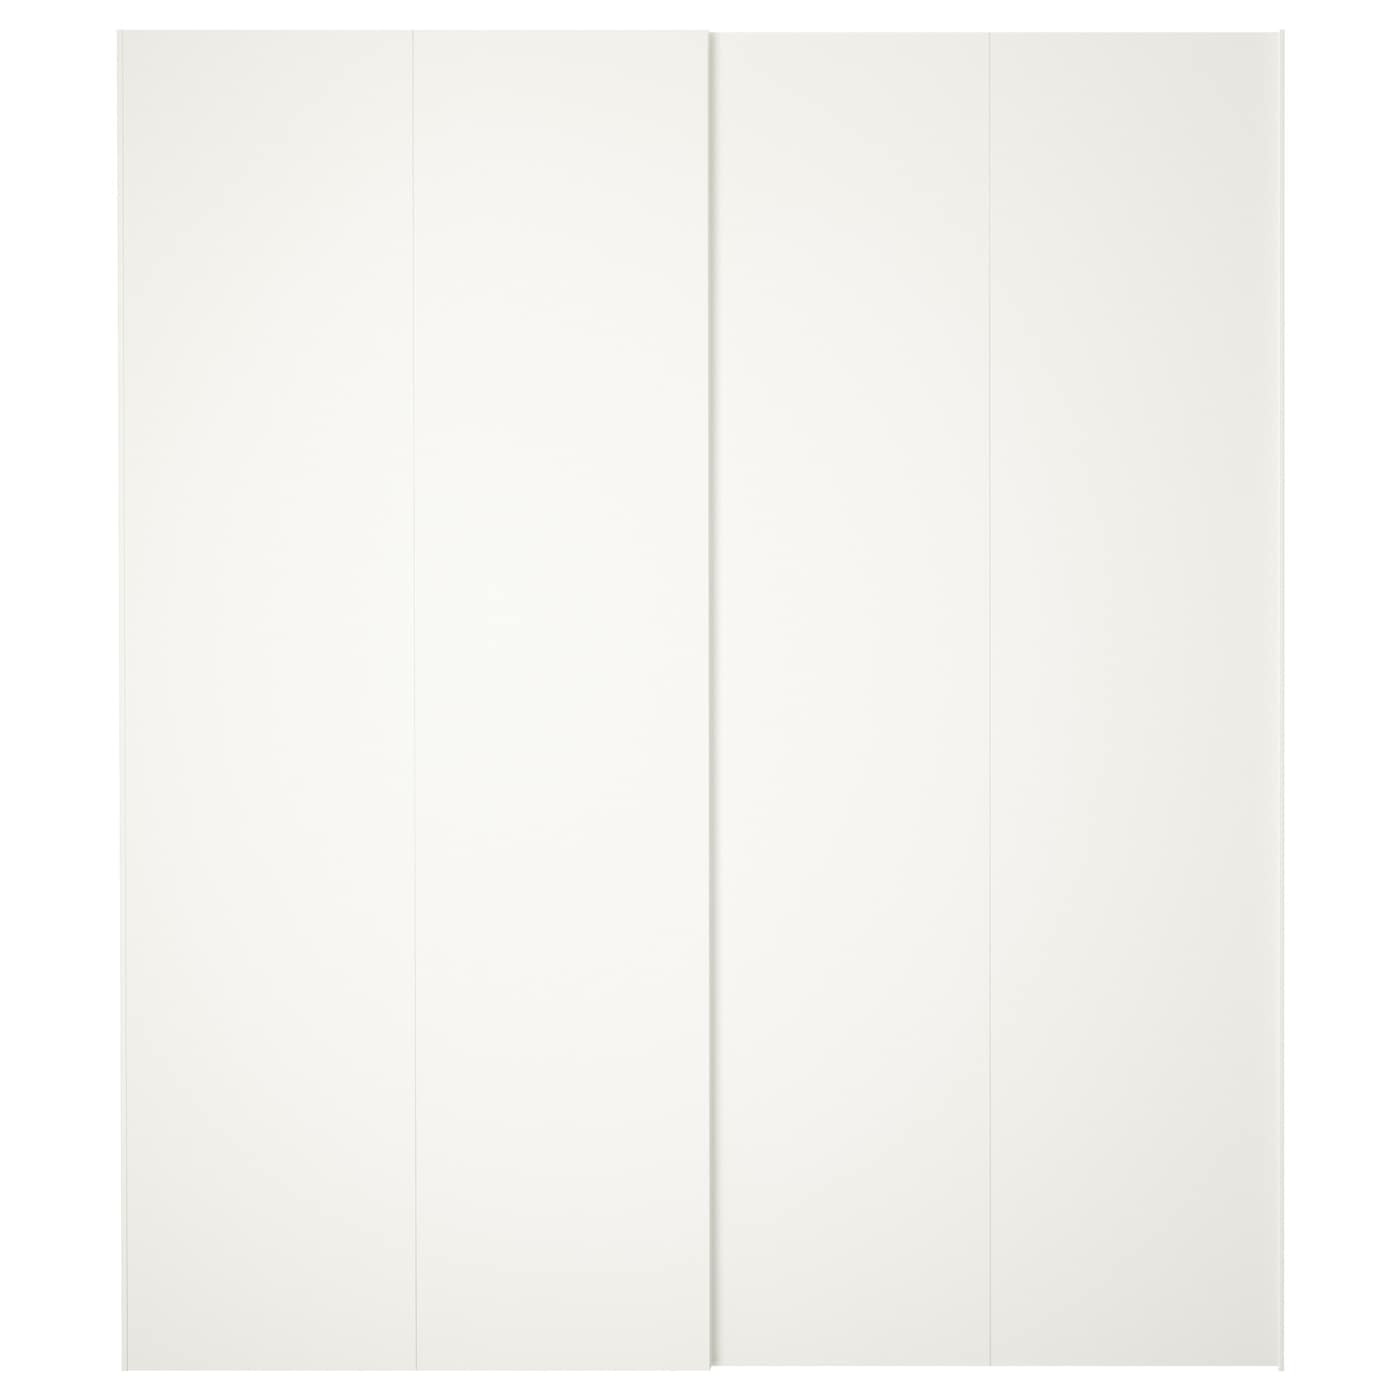 Пара раздвижных дверей - HASVIK IKEA/ ХАСВИК ИКЕА, 200х236 см,  белый